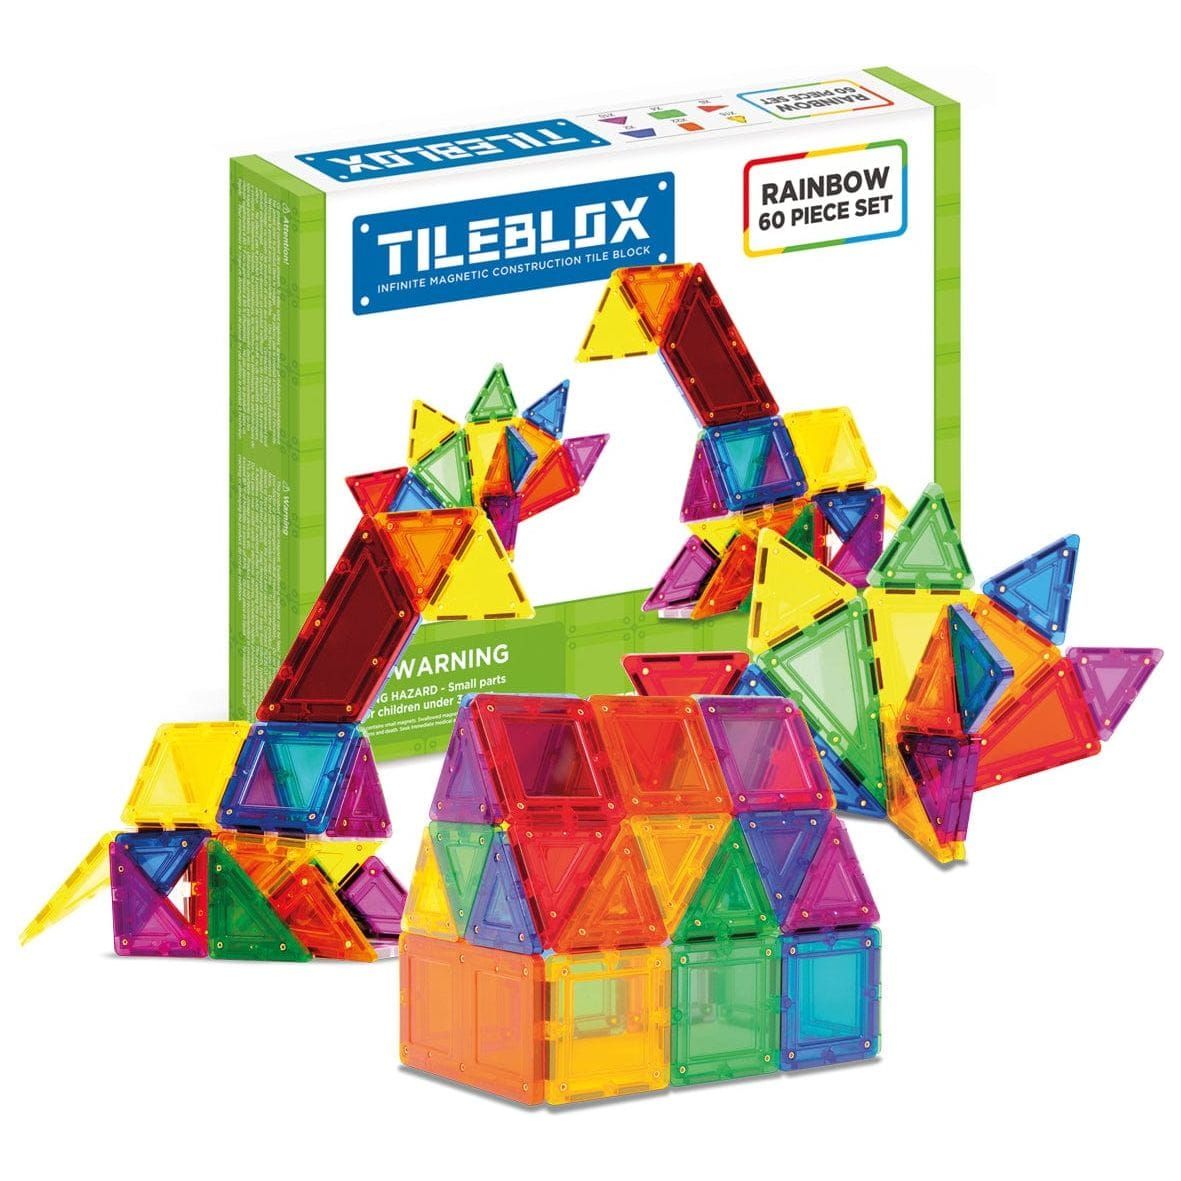 Magformers TileBlox Construction Toy 60 Piece Set 